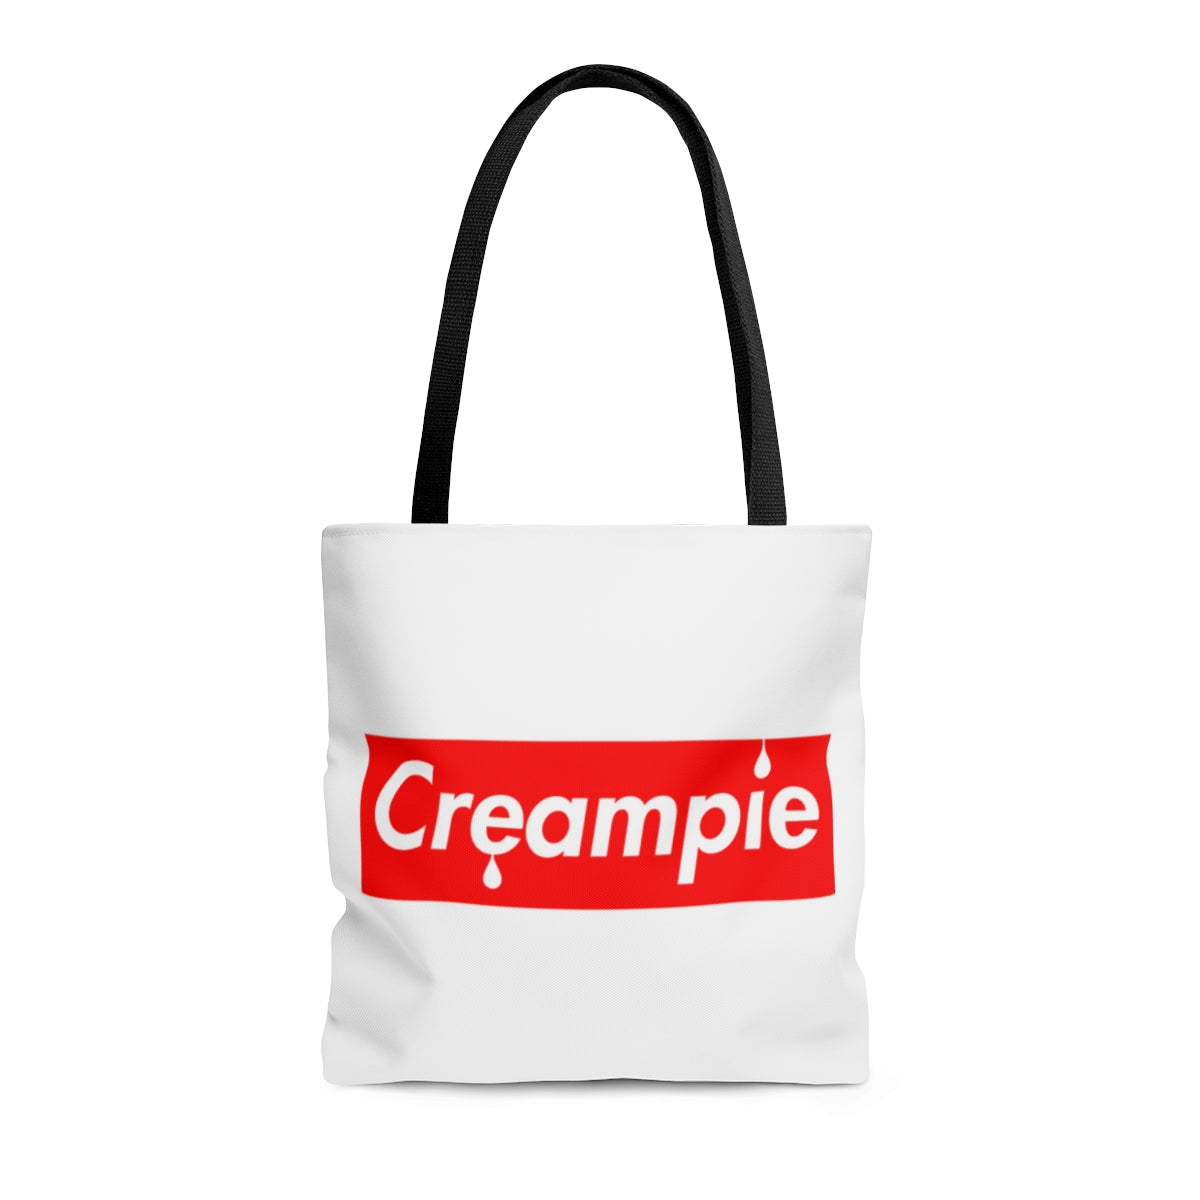 Creampie Tote Bag